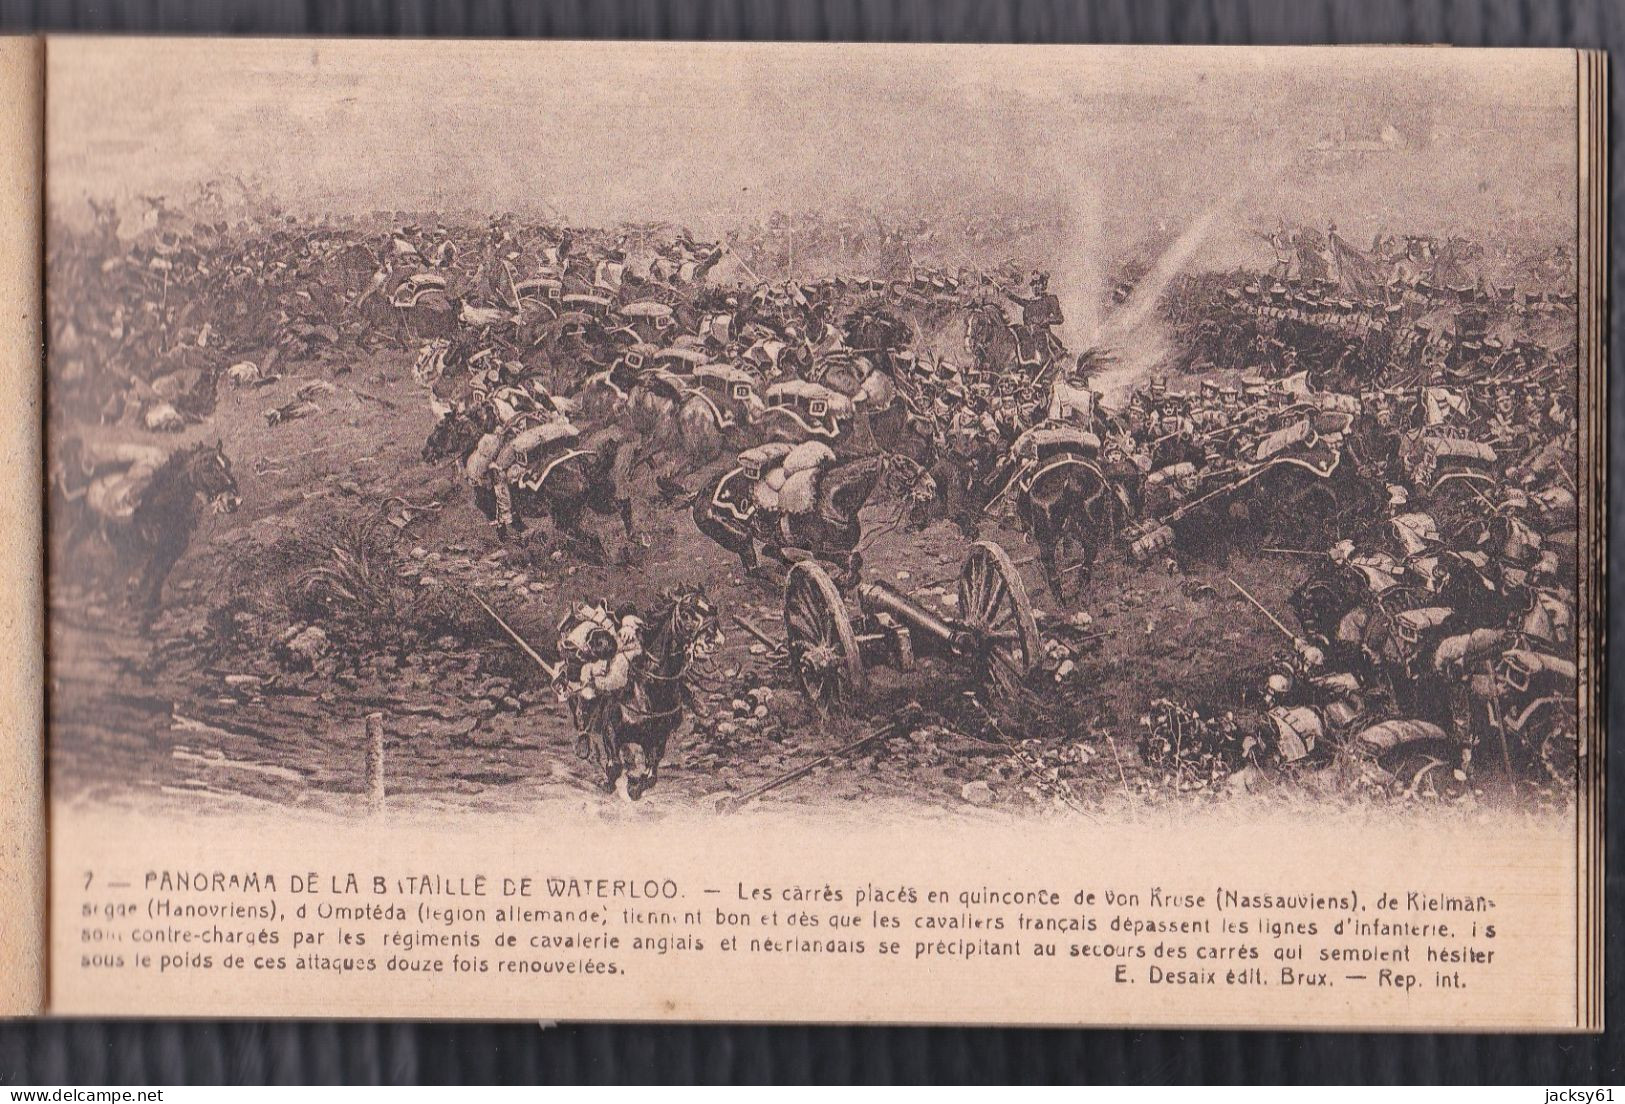 panorama de la bataille de waterloo - ( 12 cp)